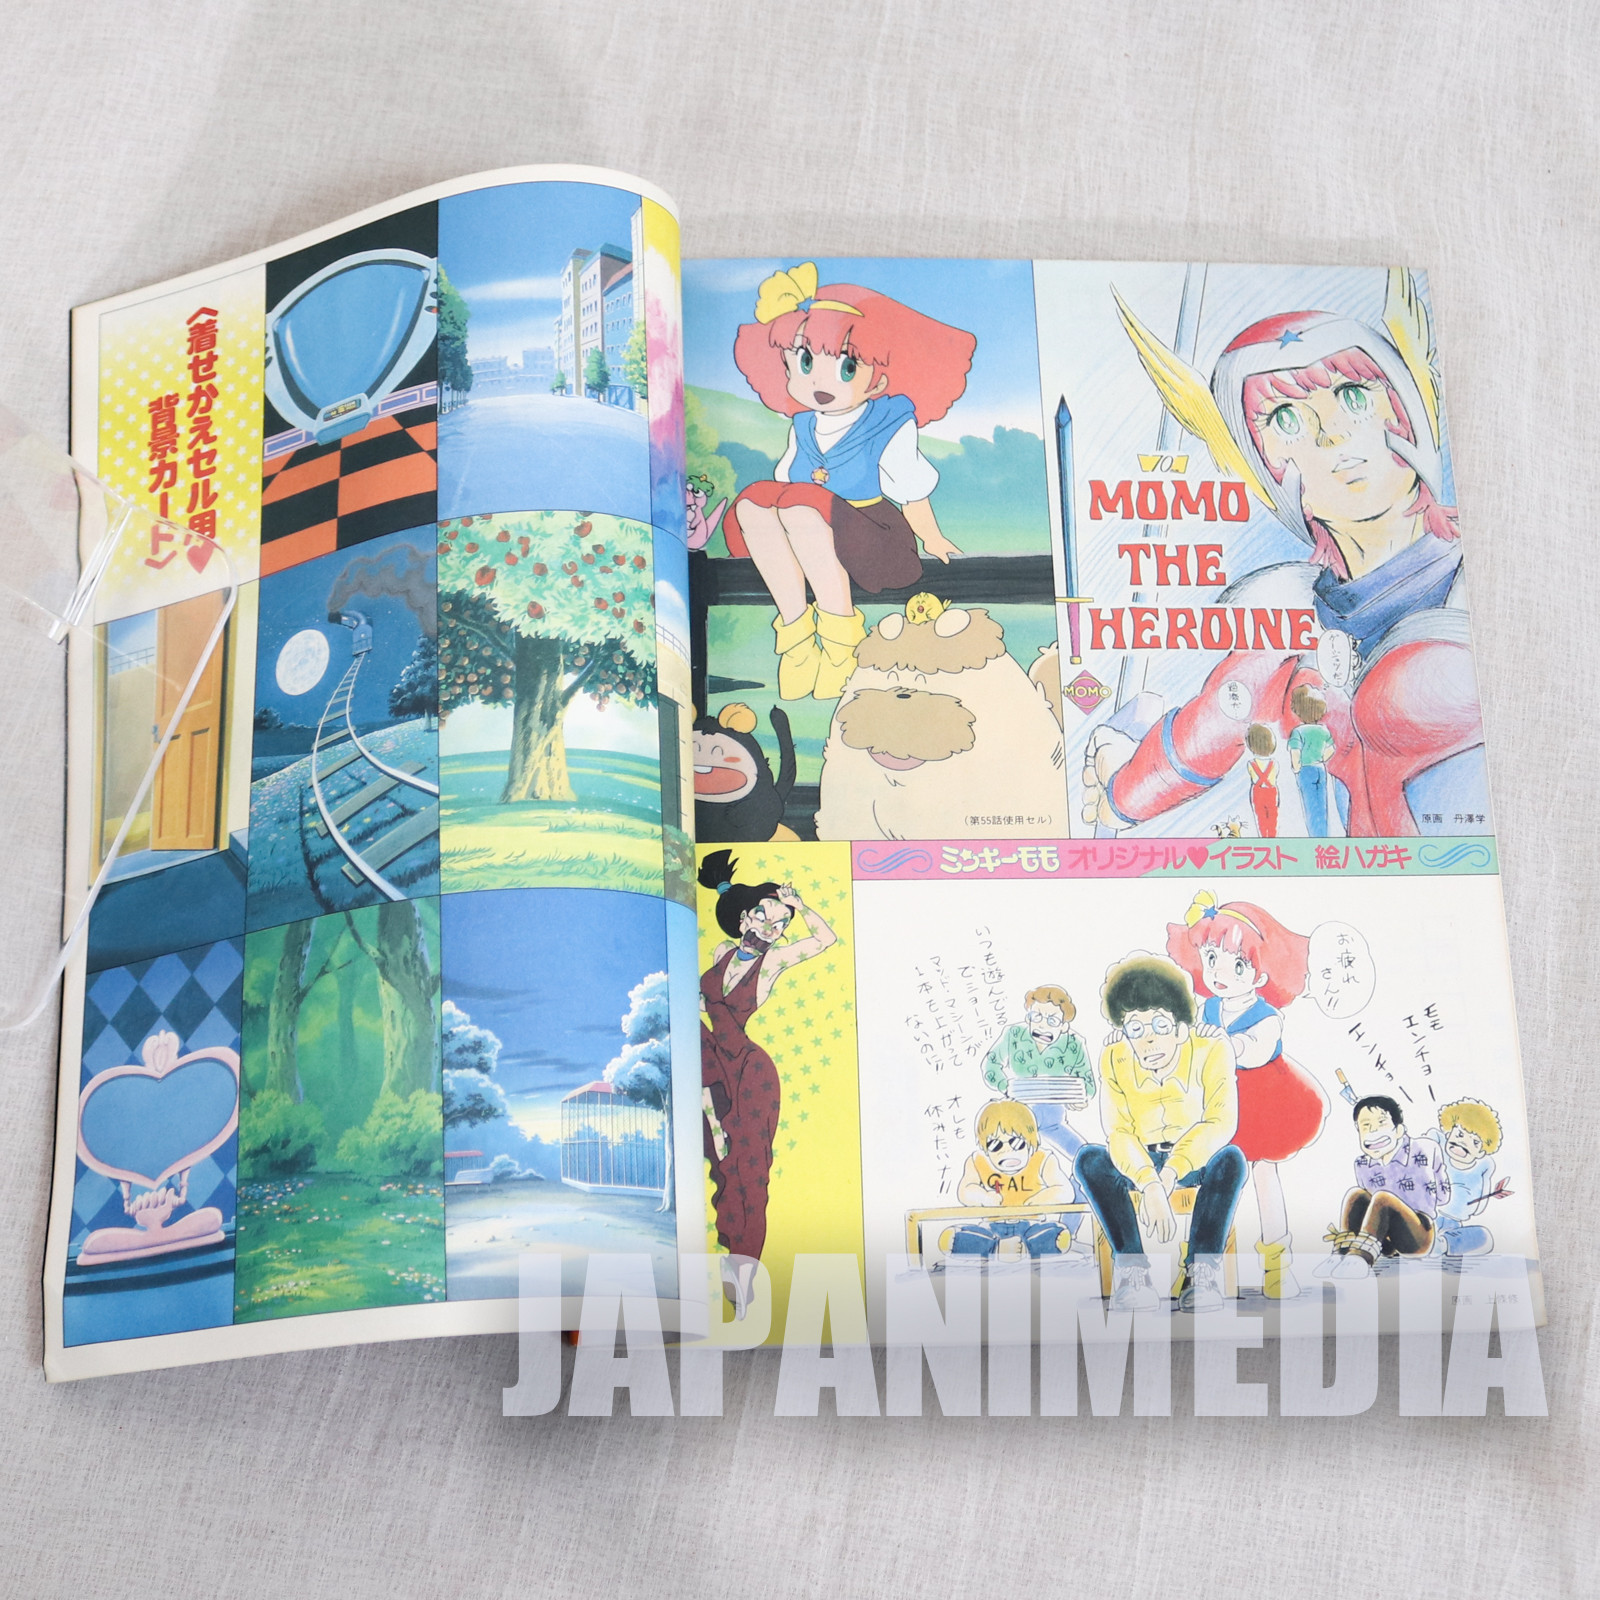 Magical Princess Minky Momo Fanroad #2 Illustration Art Book JAPAN ANIME -  Japanimedia Store